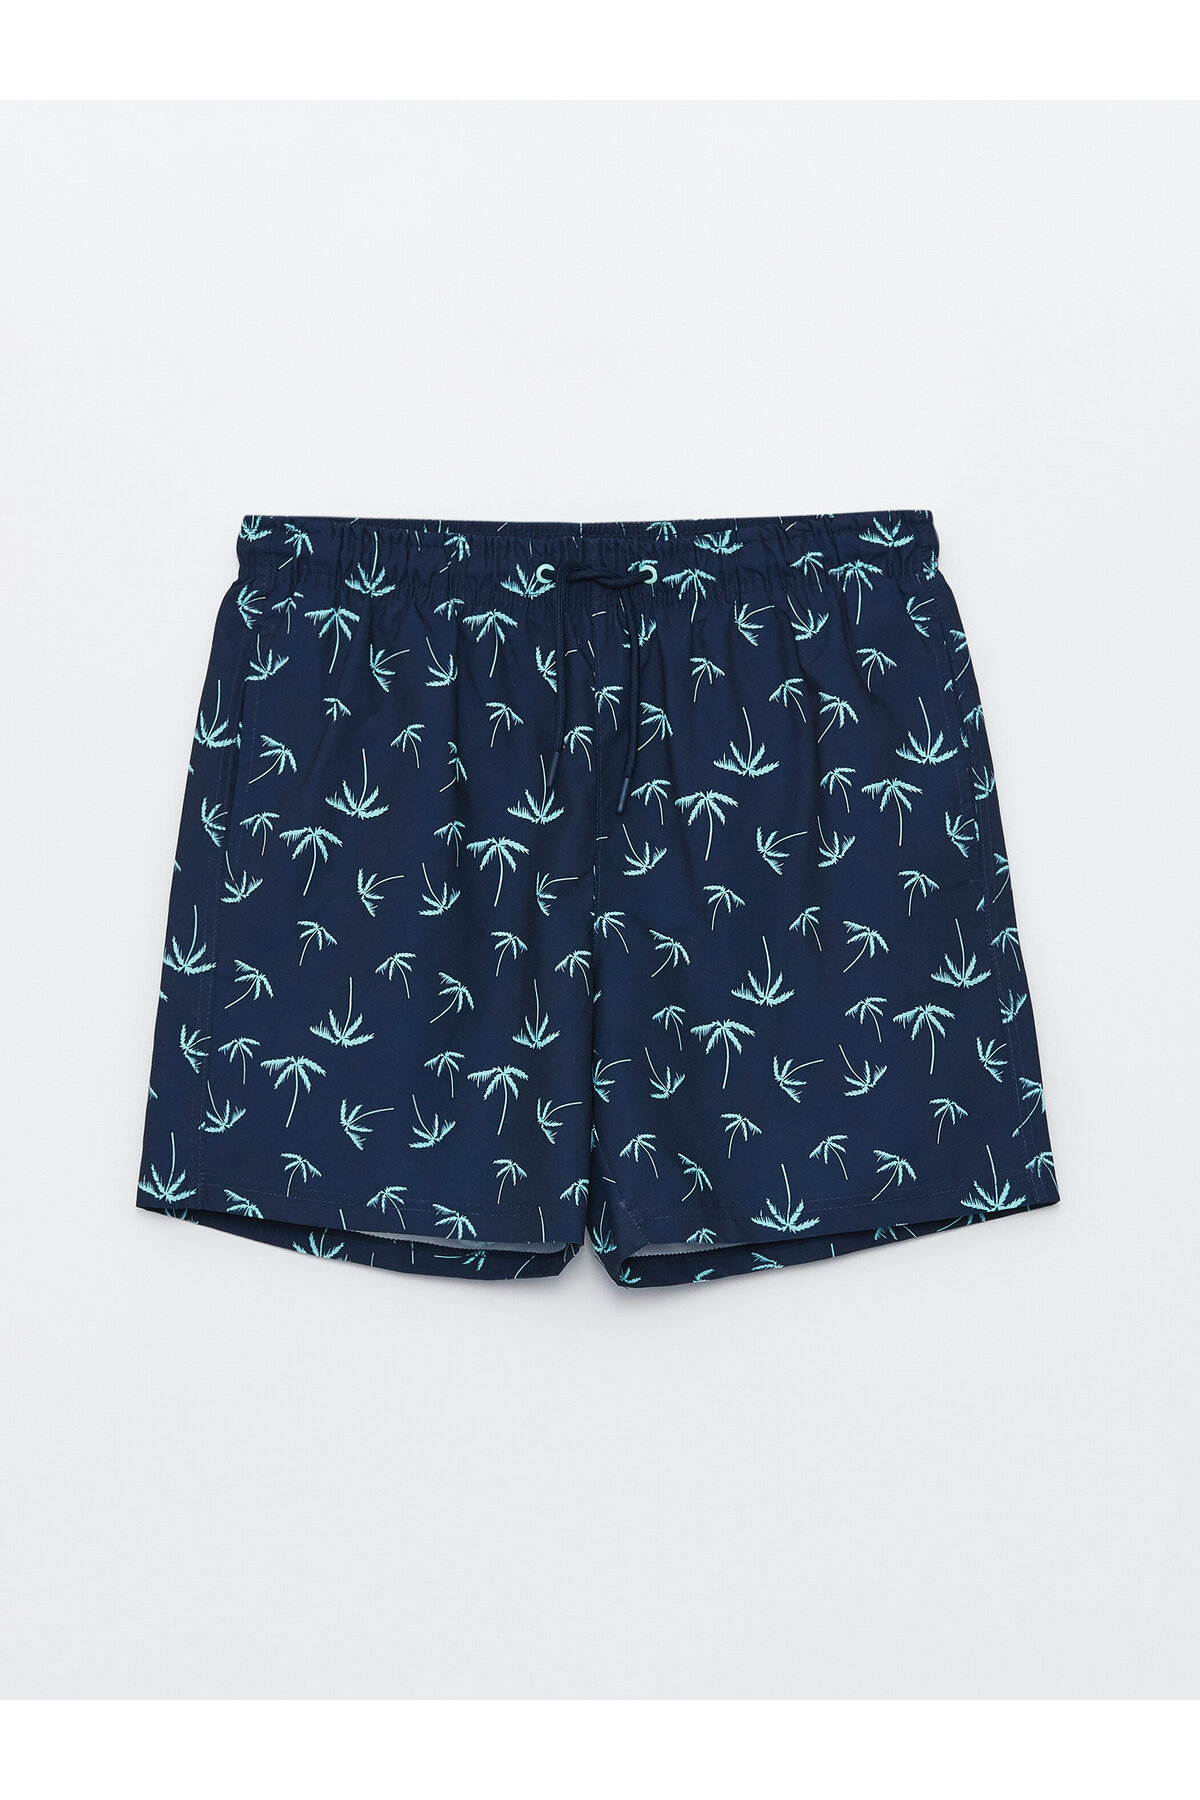 LC Waikiki Men's Patterned Shorts, Shorts